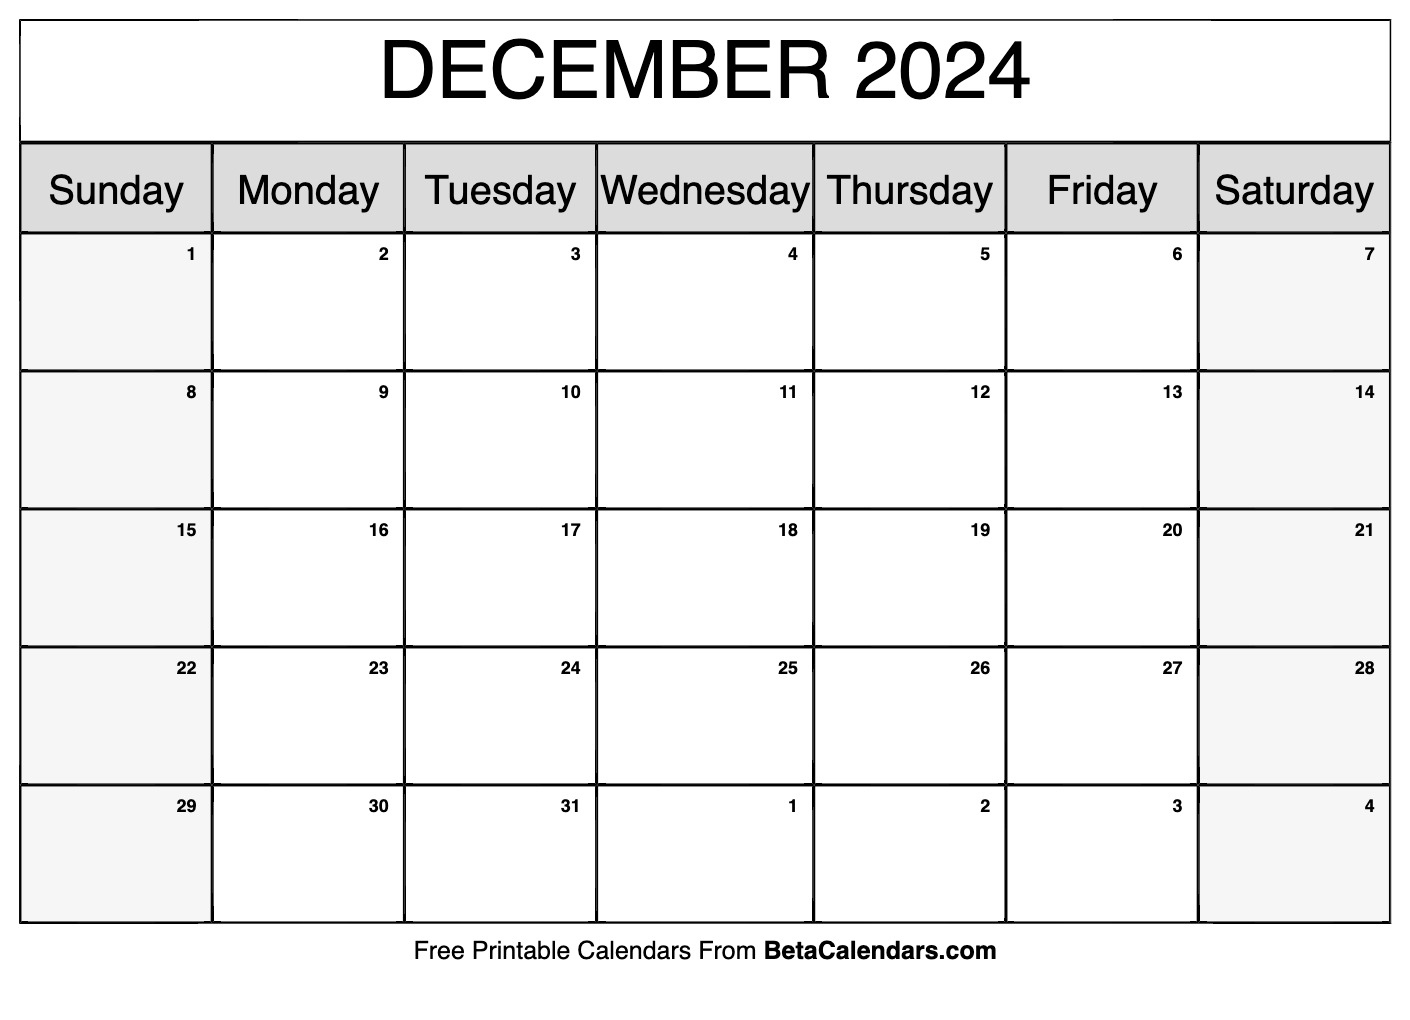 Free Printable December 2024 Calendar with Free Printable Blank December 2024 Calendar